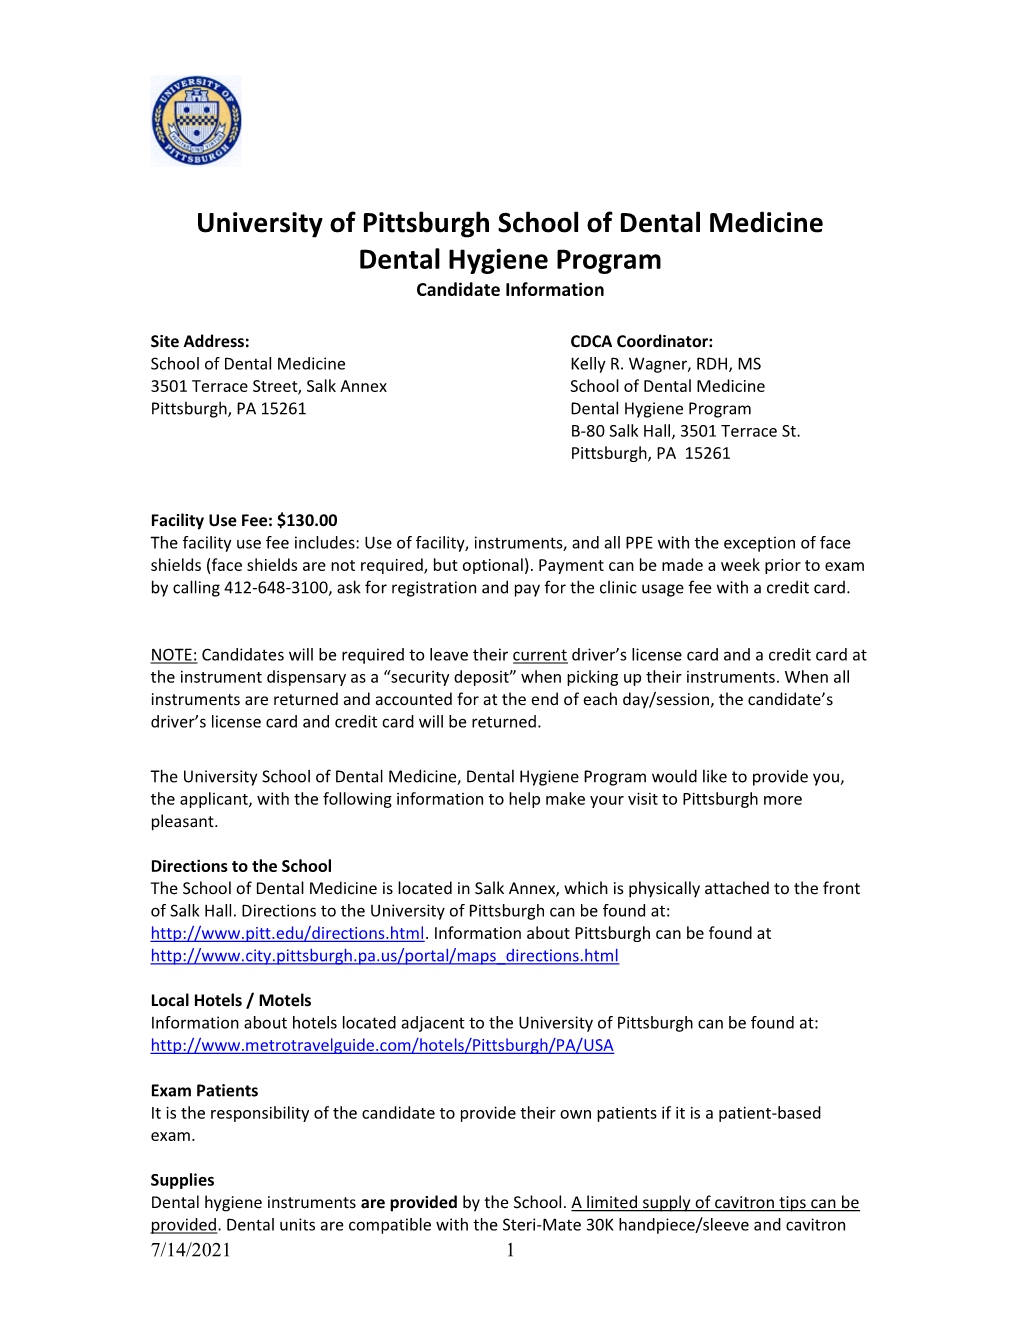 University of Pittsburgh School of Dental Medicine Dental Hygiene Program Candidate Information